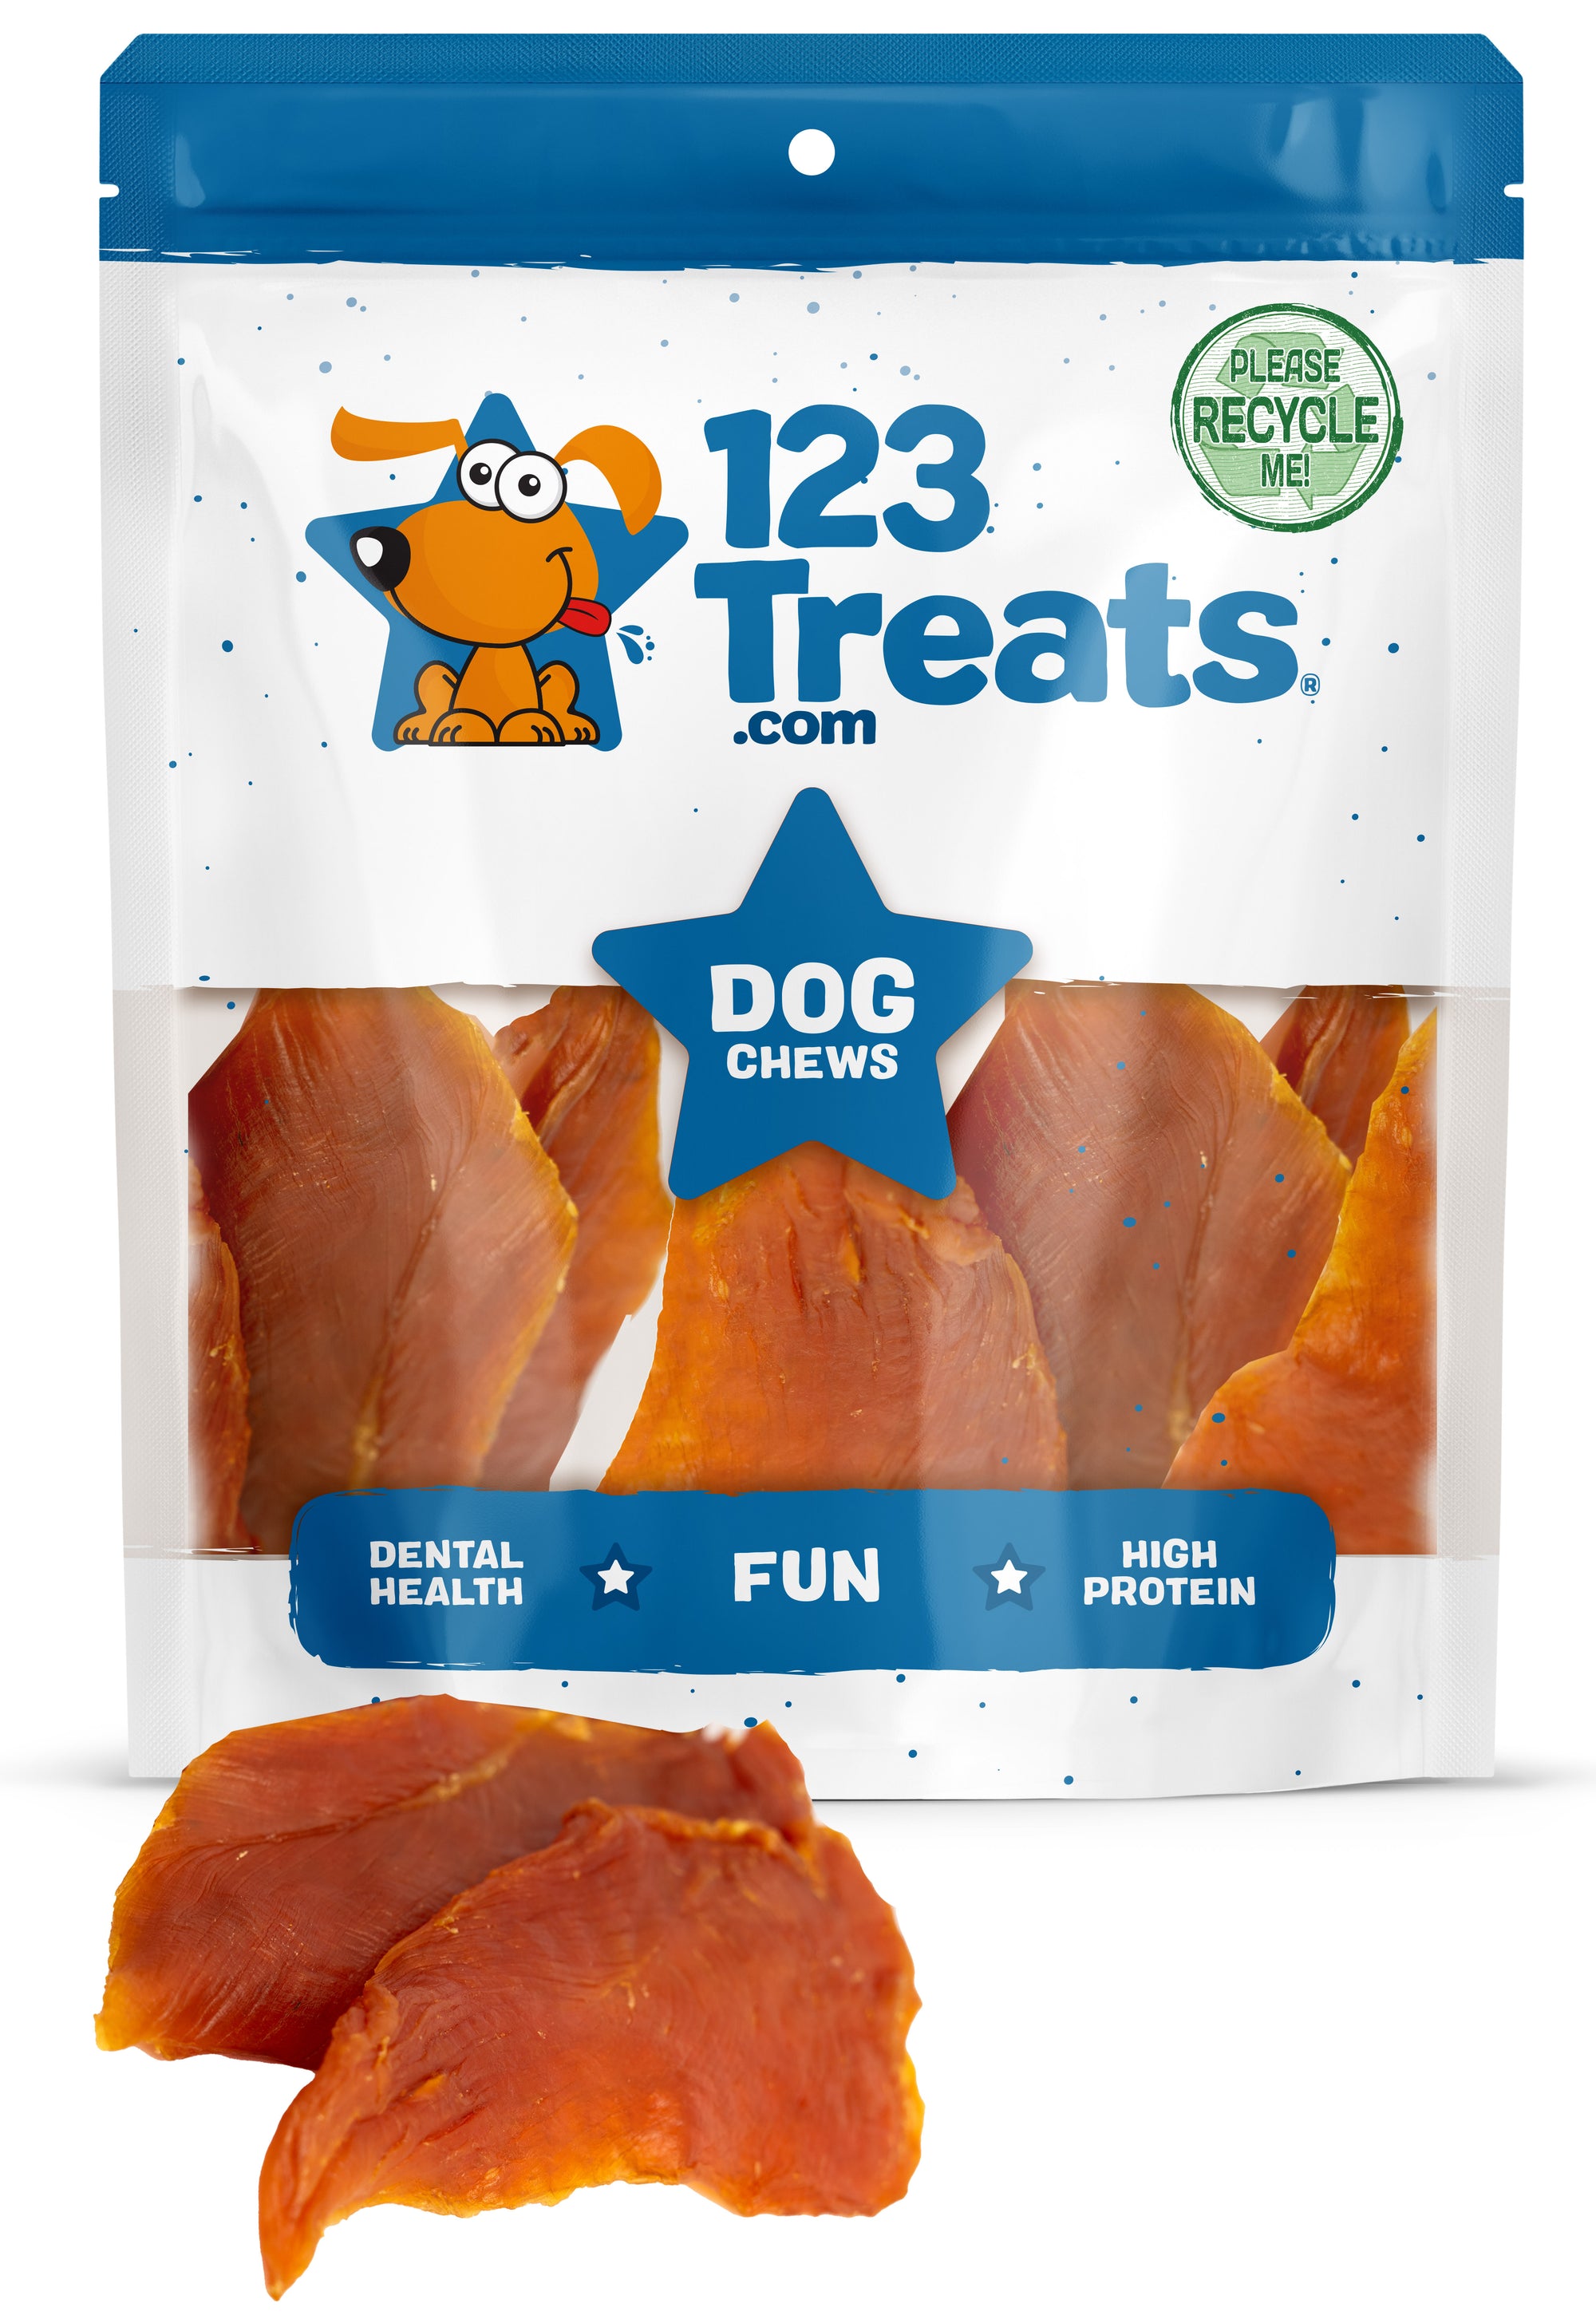 Chicken Jerky BBQ flavor for Dogs Bulk 1Pound | 100% Natural Chicken Dog Treats Dog Treats | Made in Brazil | 123 Treats